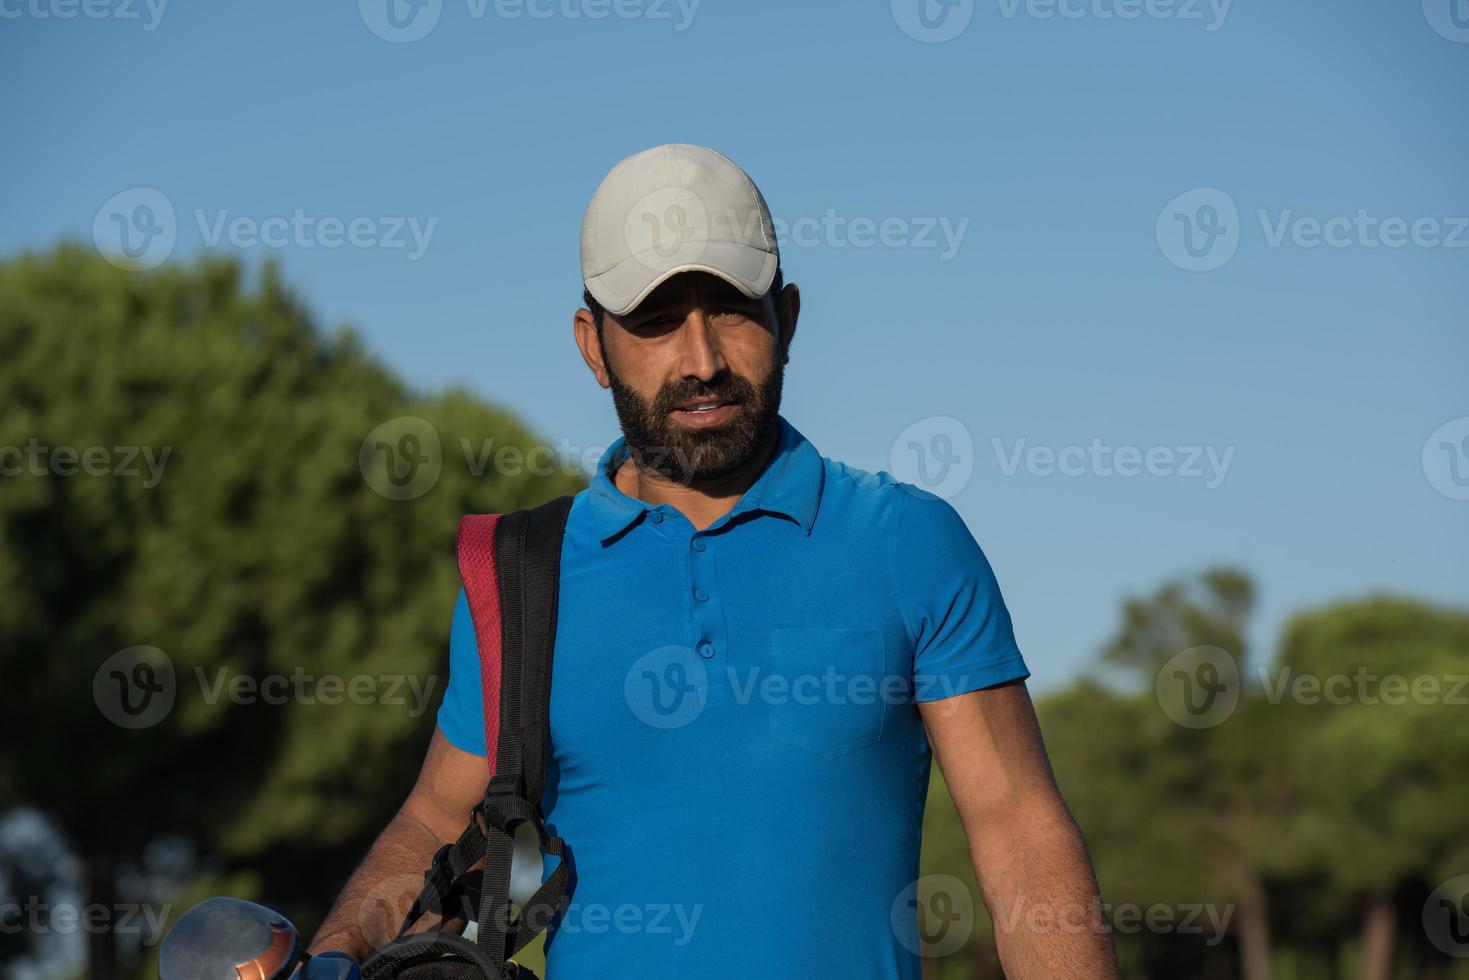 golfer  portrait at golf course photo